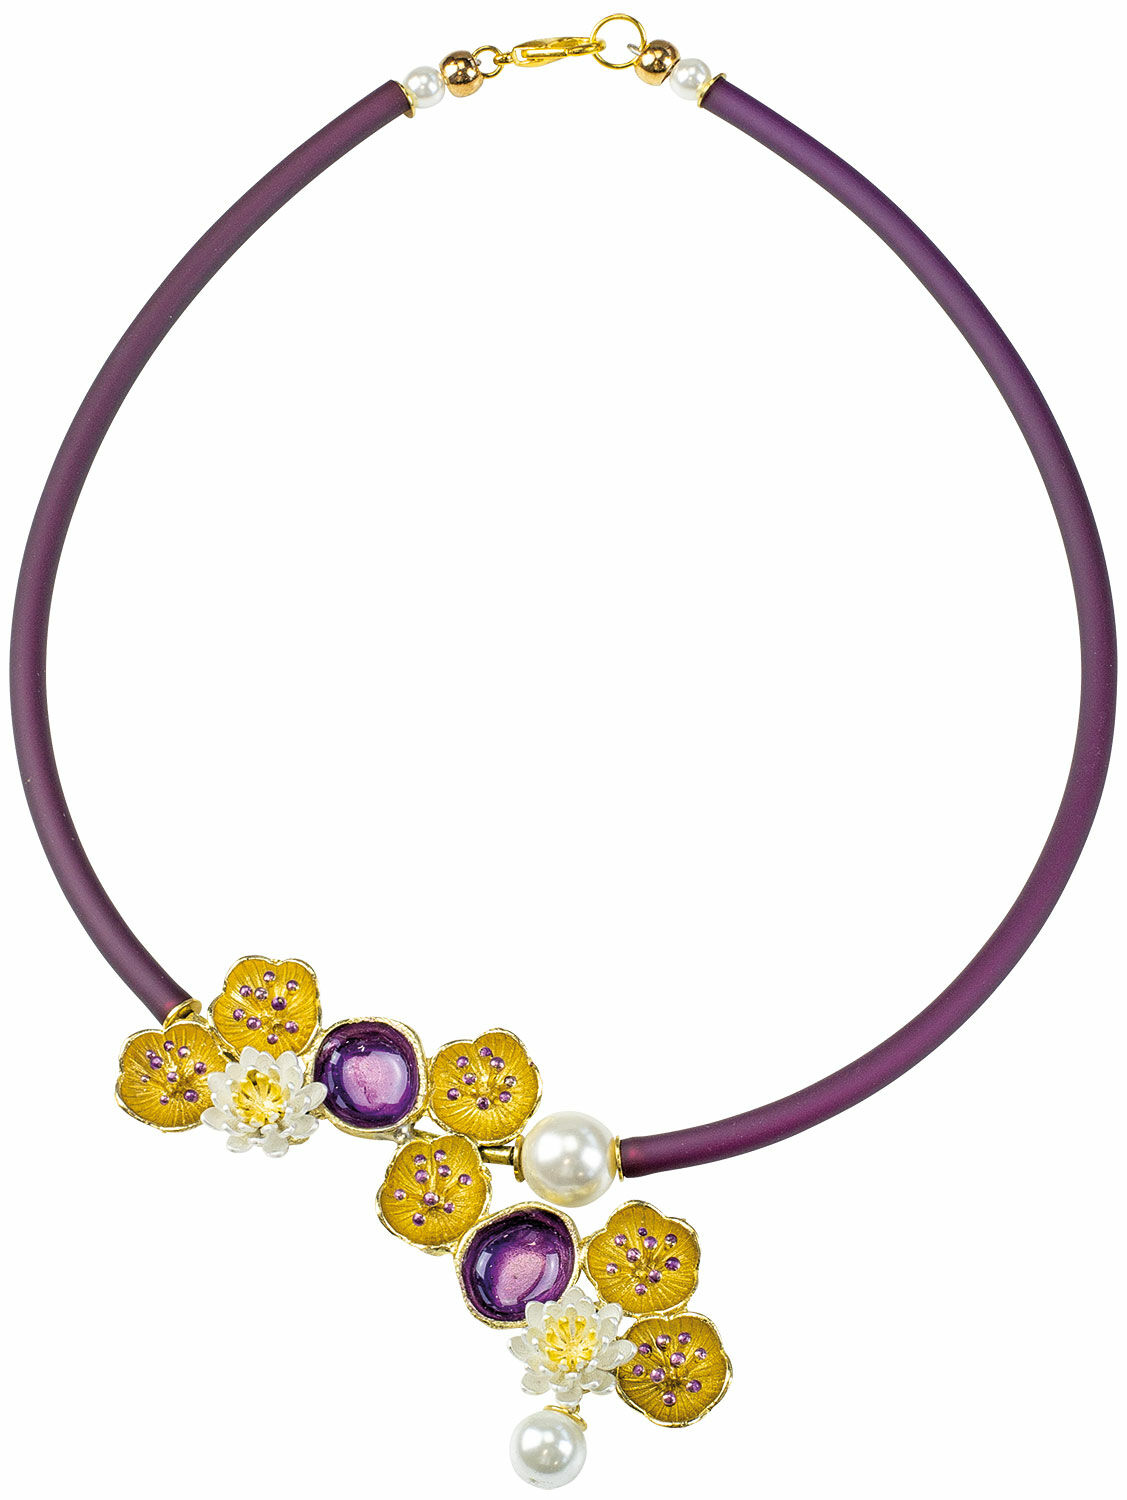 Necklace "Blossom Splendour" by Anna Mütz